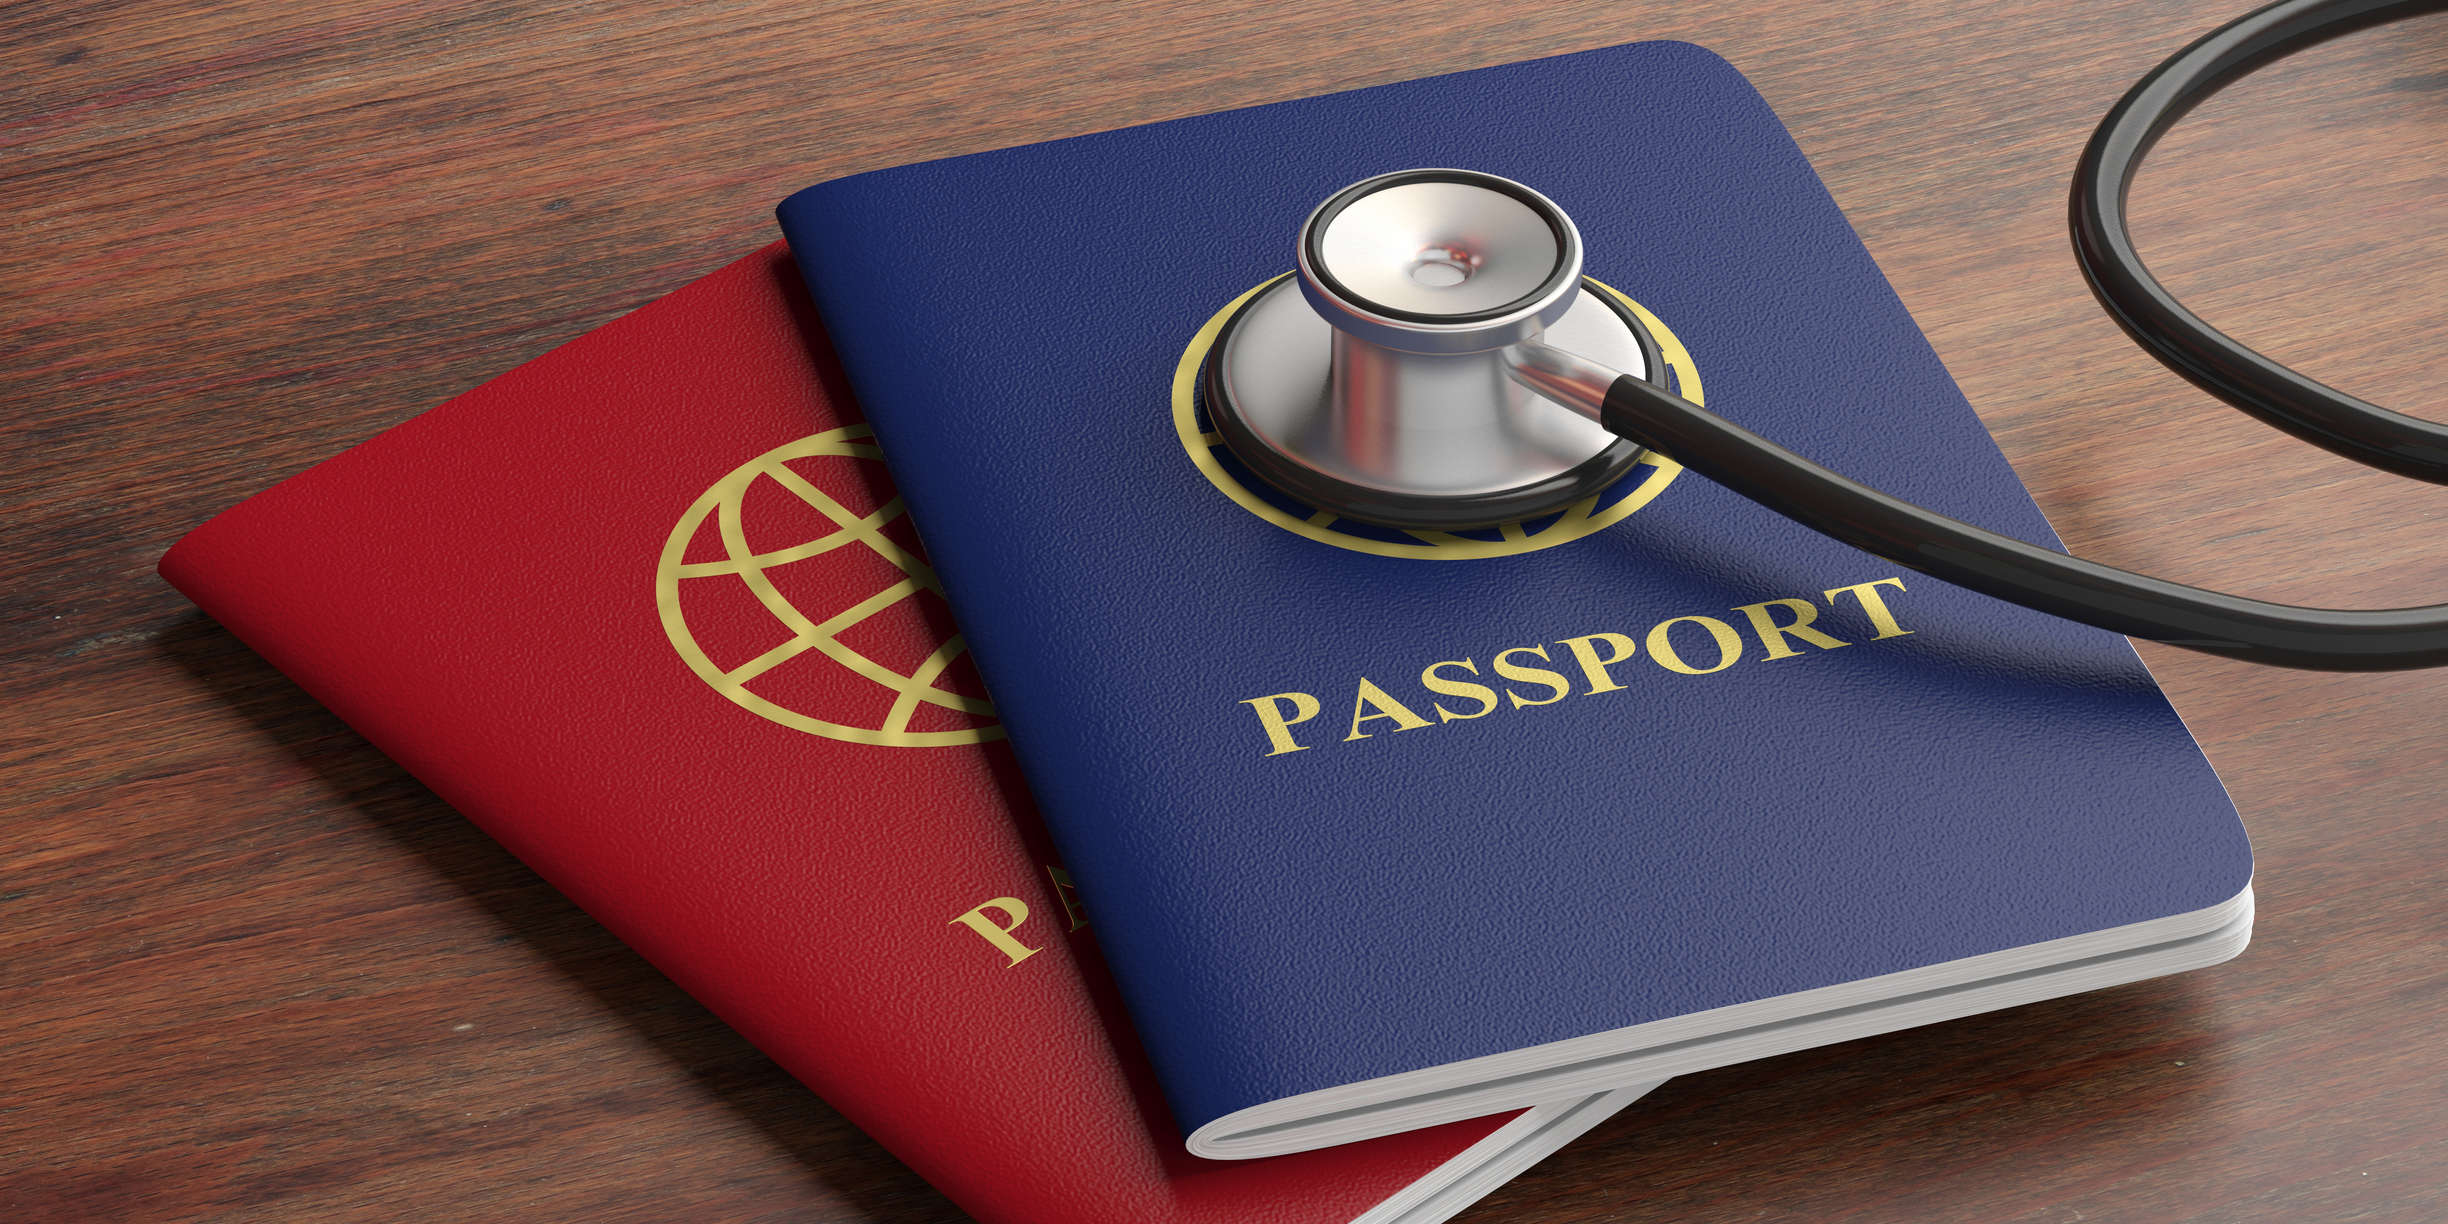 passport health travel kit